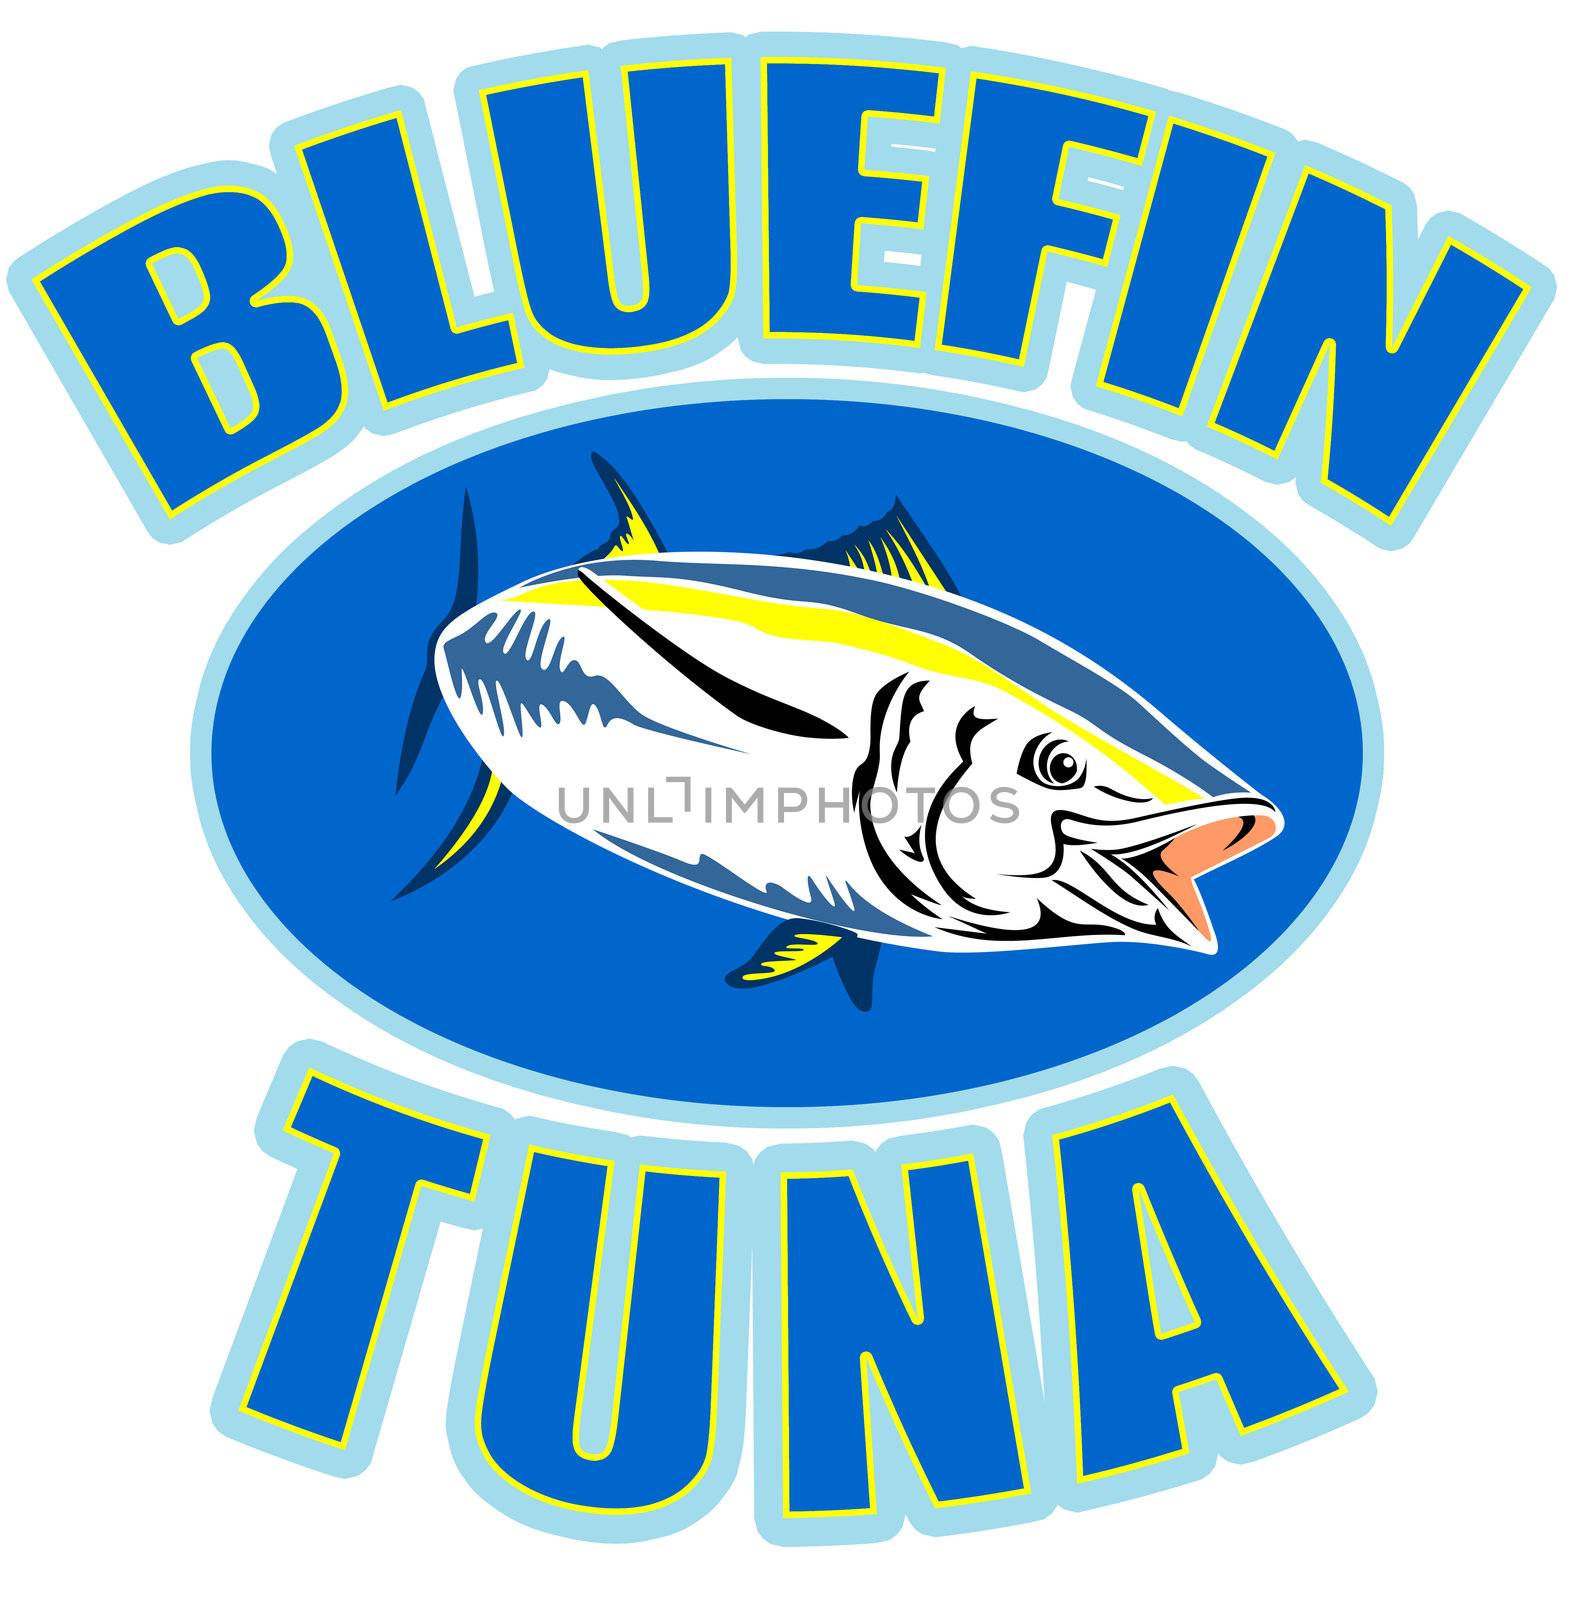 illustration of a bluefin tuna swimming with words "bluefin tuna"